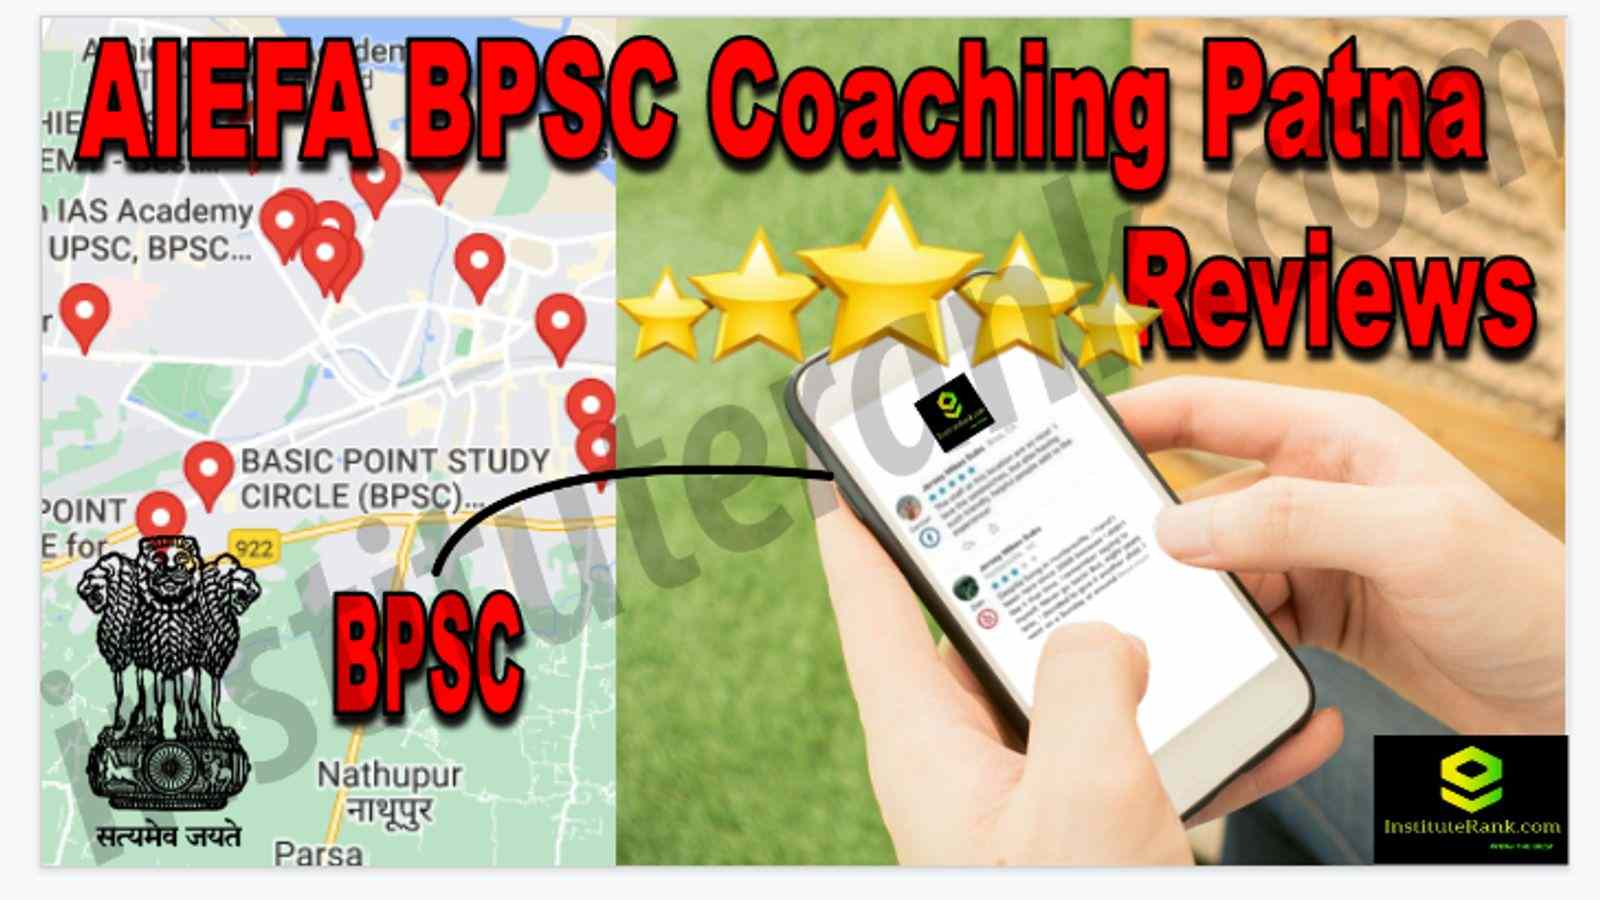 AIEFA BPSC Coaching Patna Reviews